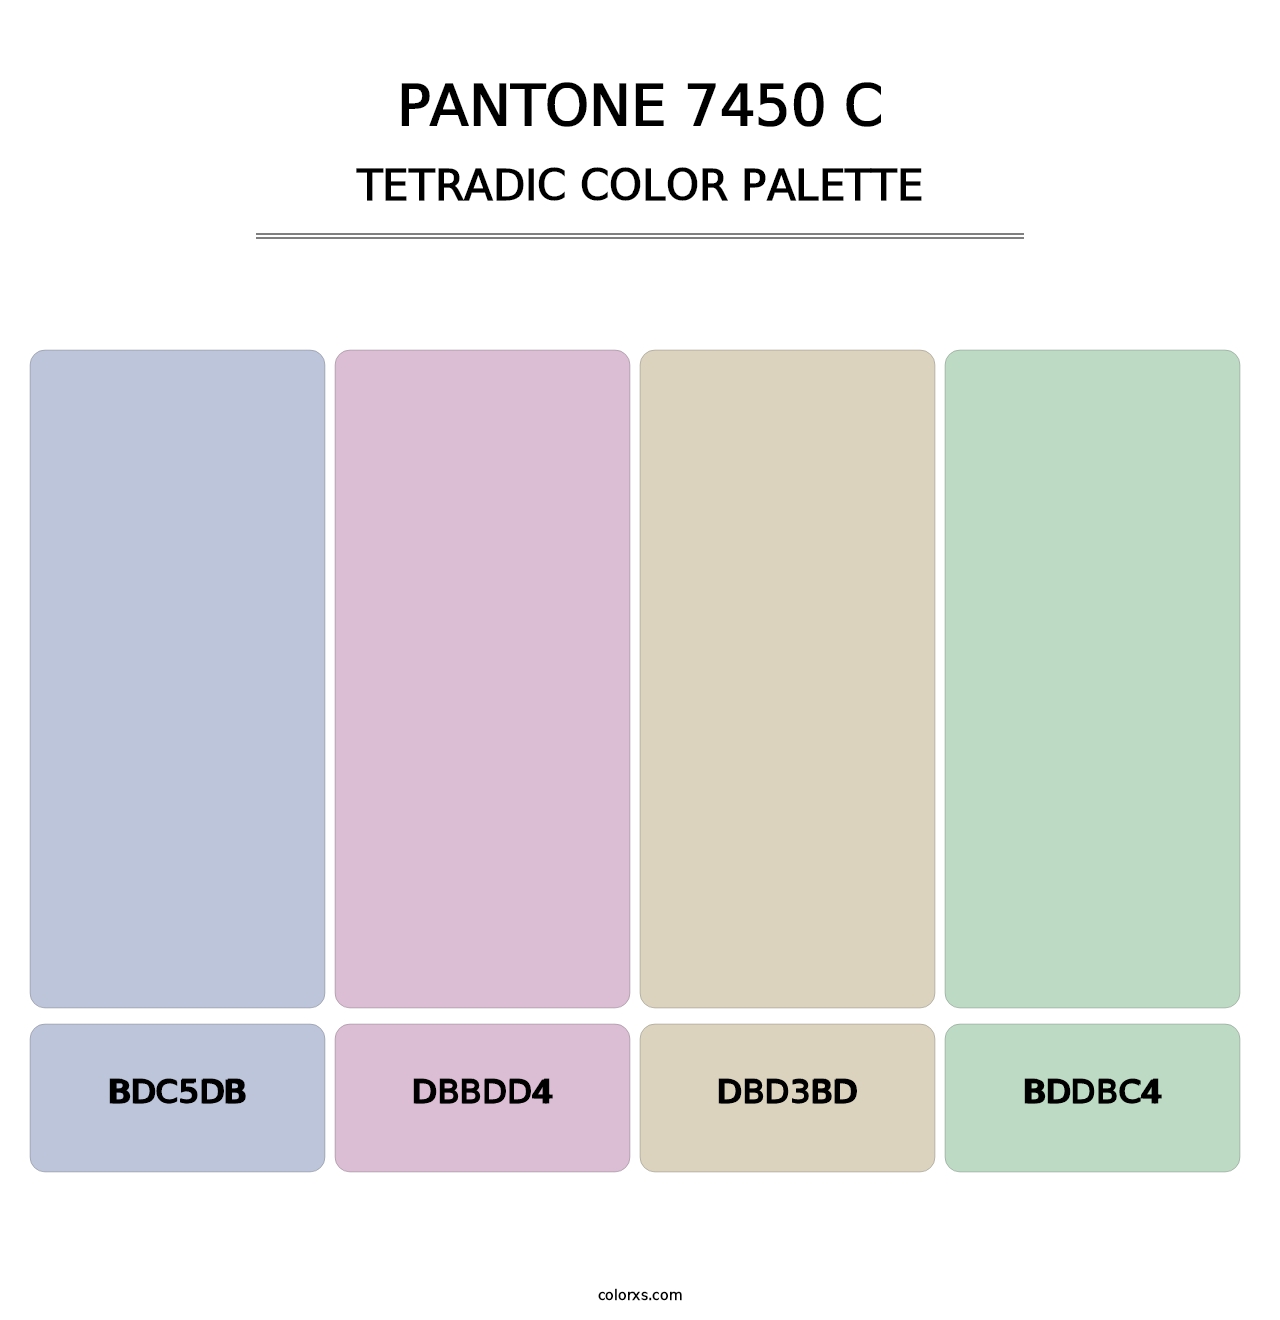 PANTONE 7450 C - Tetradic Color Palette